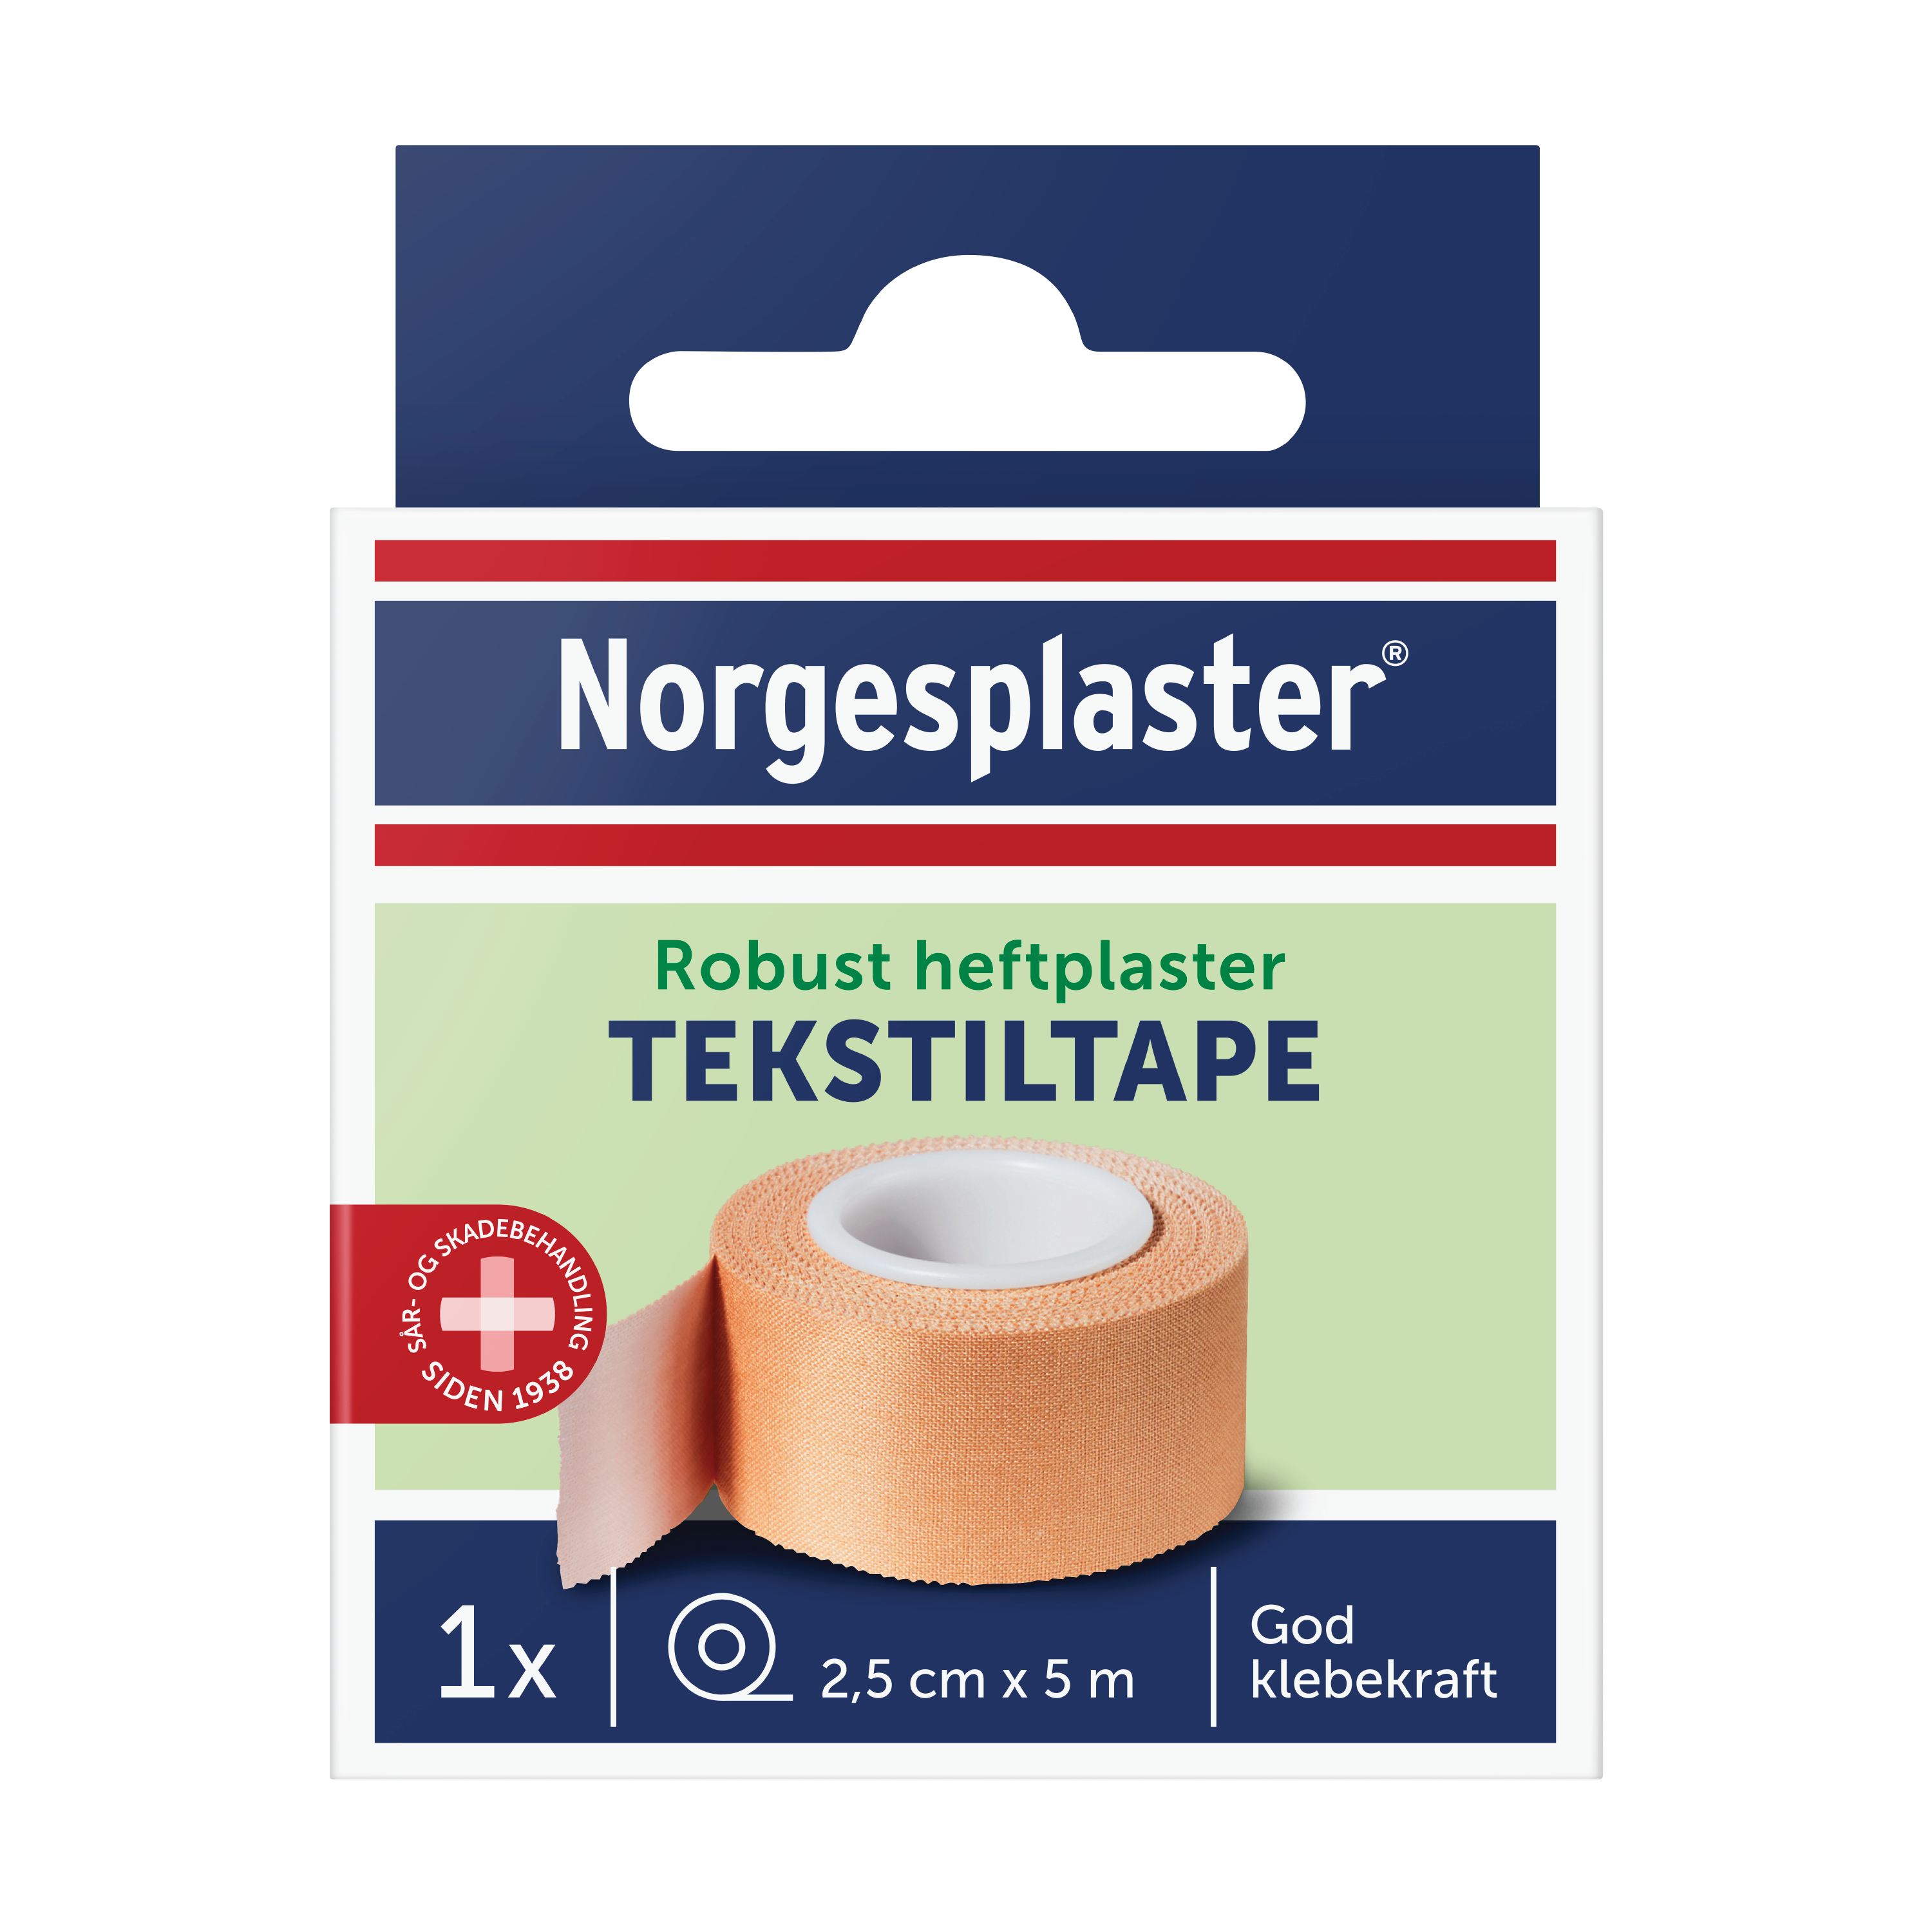 Norgesplaster Robust heftplaster, 2,5cm x 5m, 1 stk.